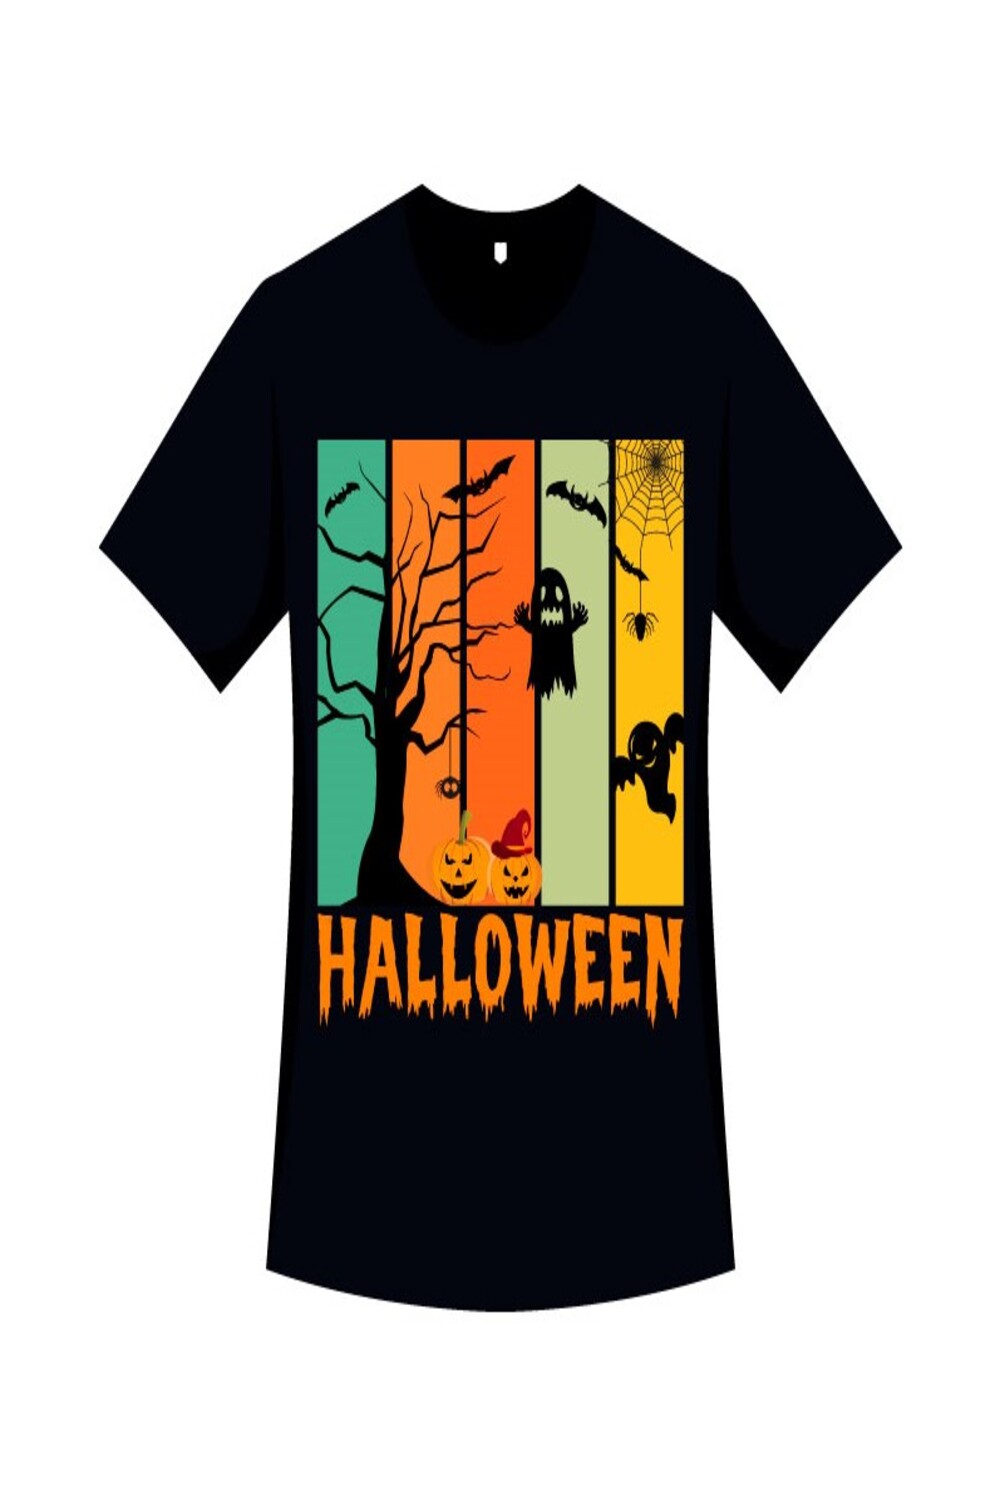 Halloween Vintage Color T-shirt Pinterest image.